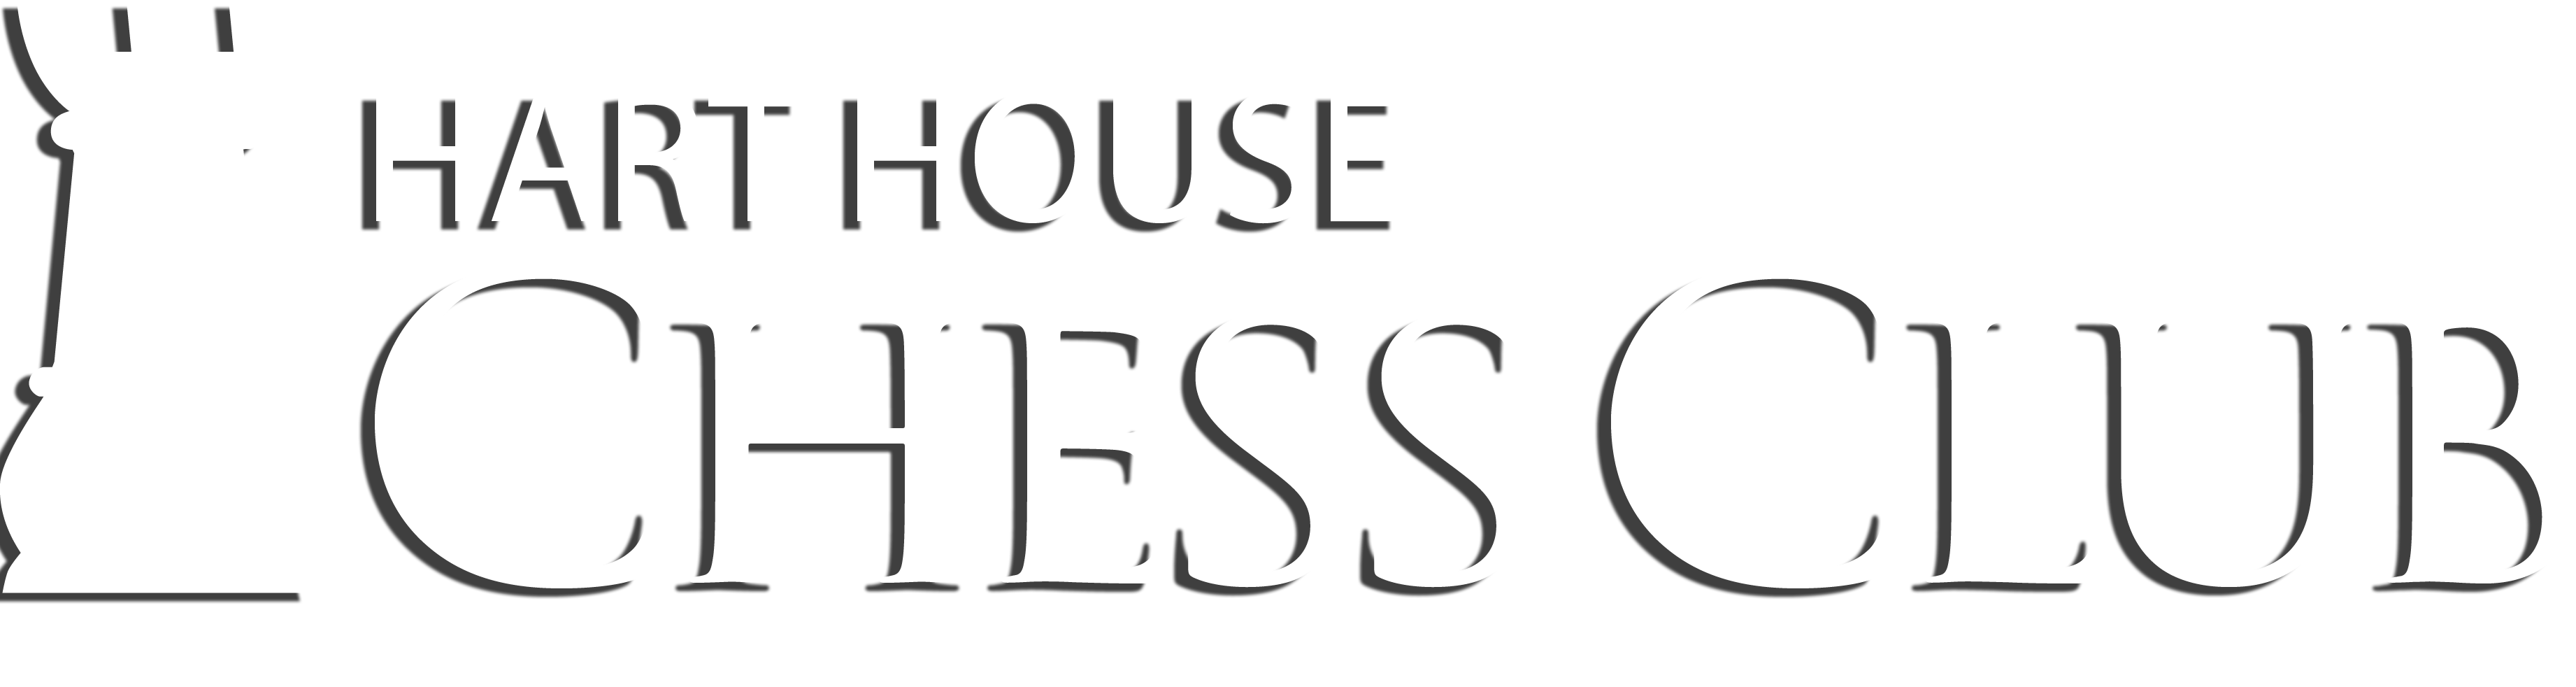 Hart House Chess Club Tournaments